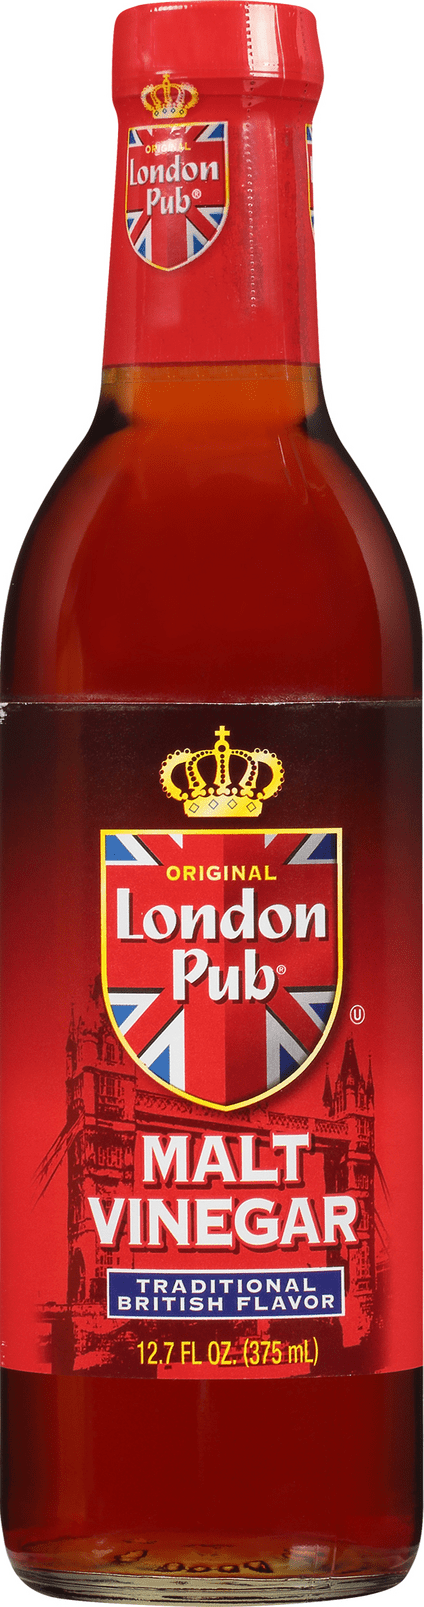 London Pub Malt Vinegar 12.7 oz